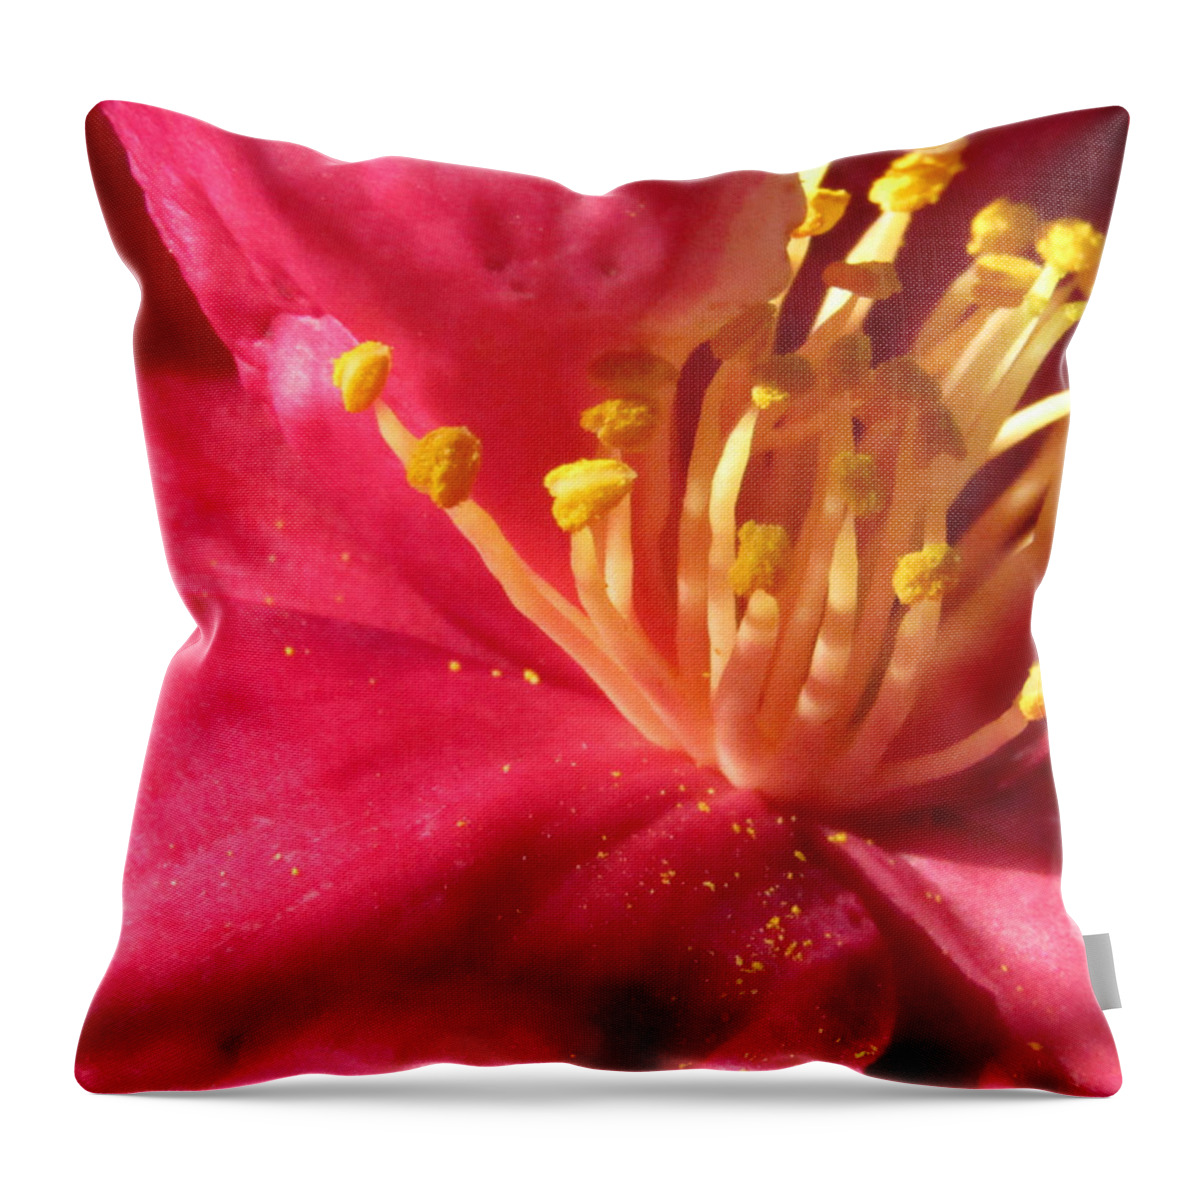 Flower Throw Pillow featuring the photograph Pollen Pregnant by Robert Knight